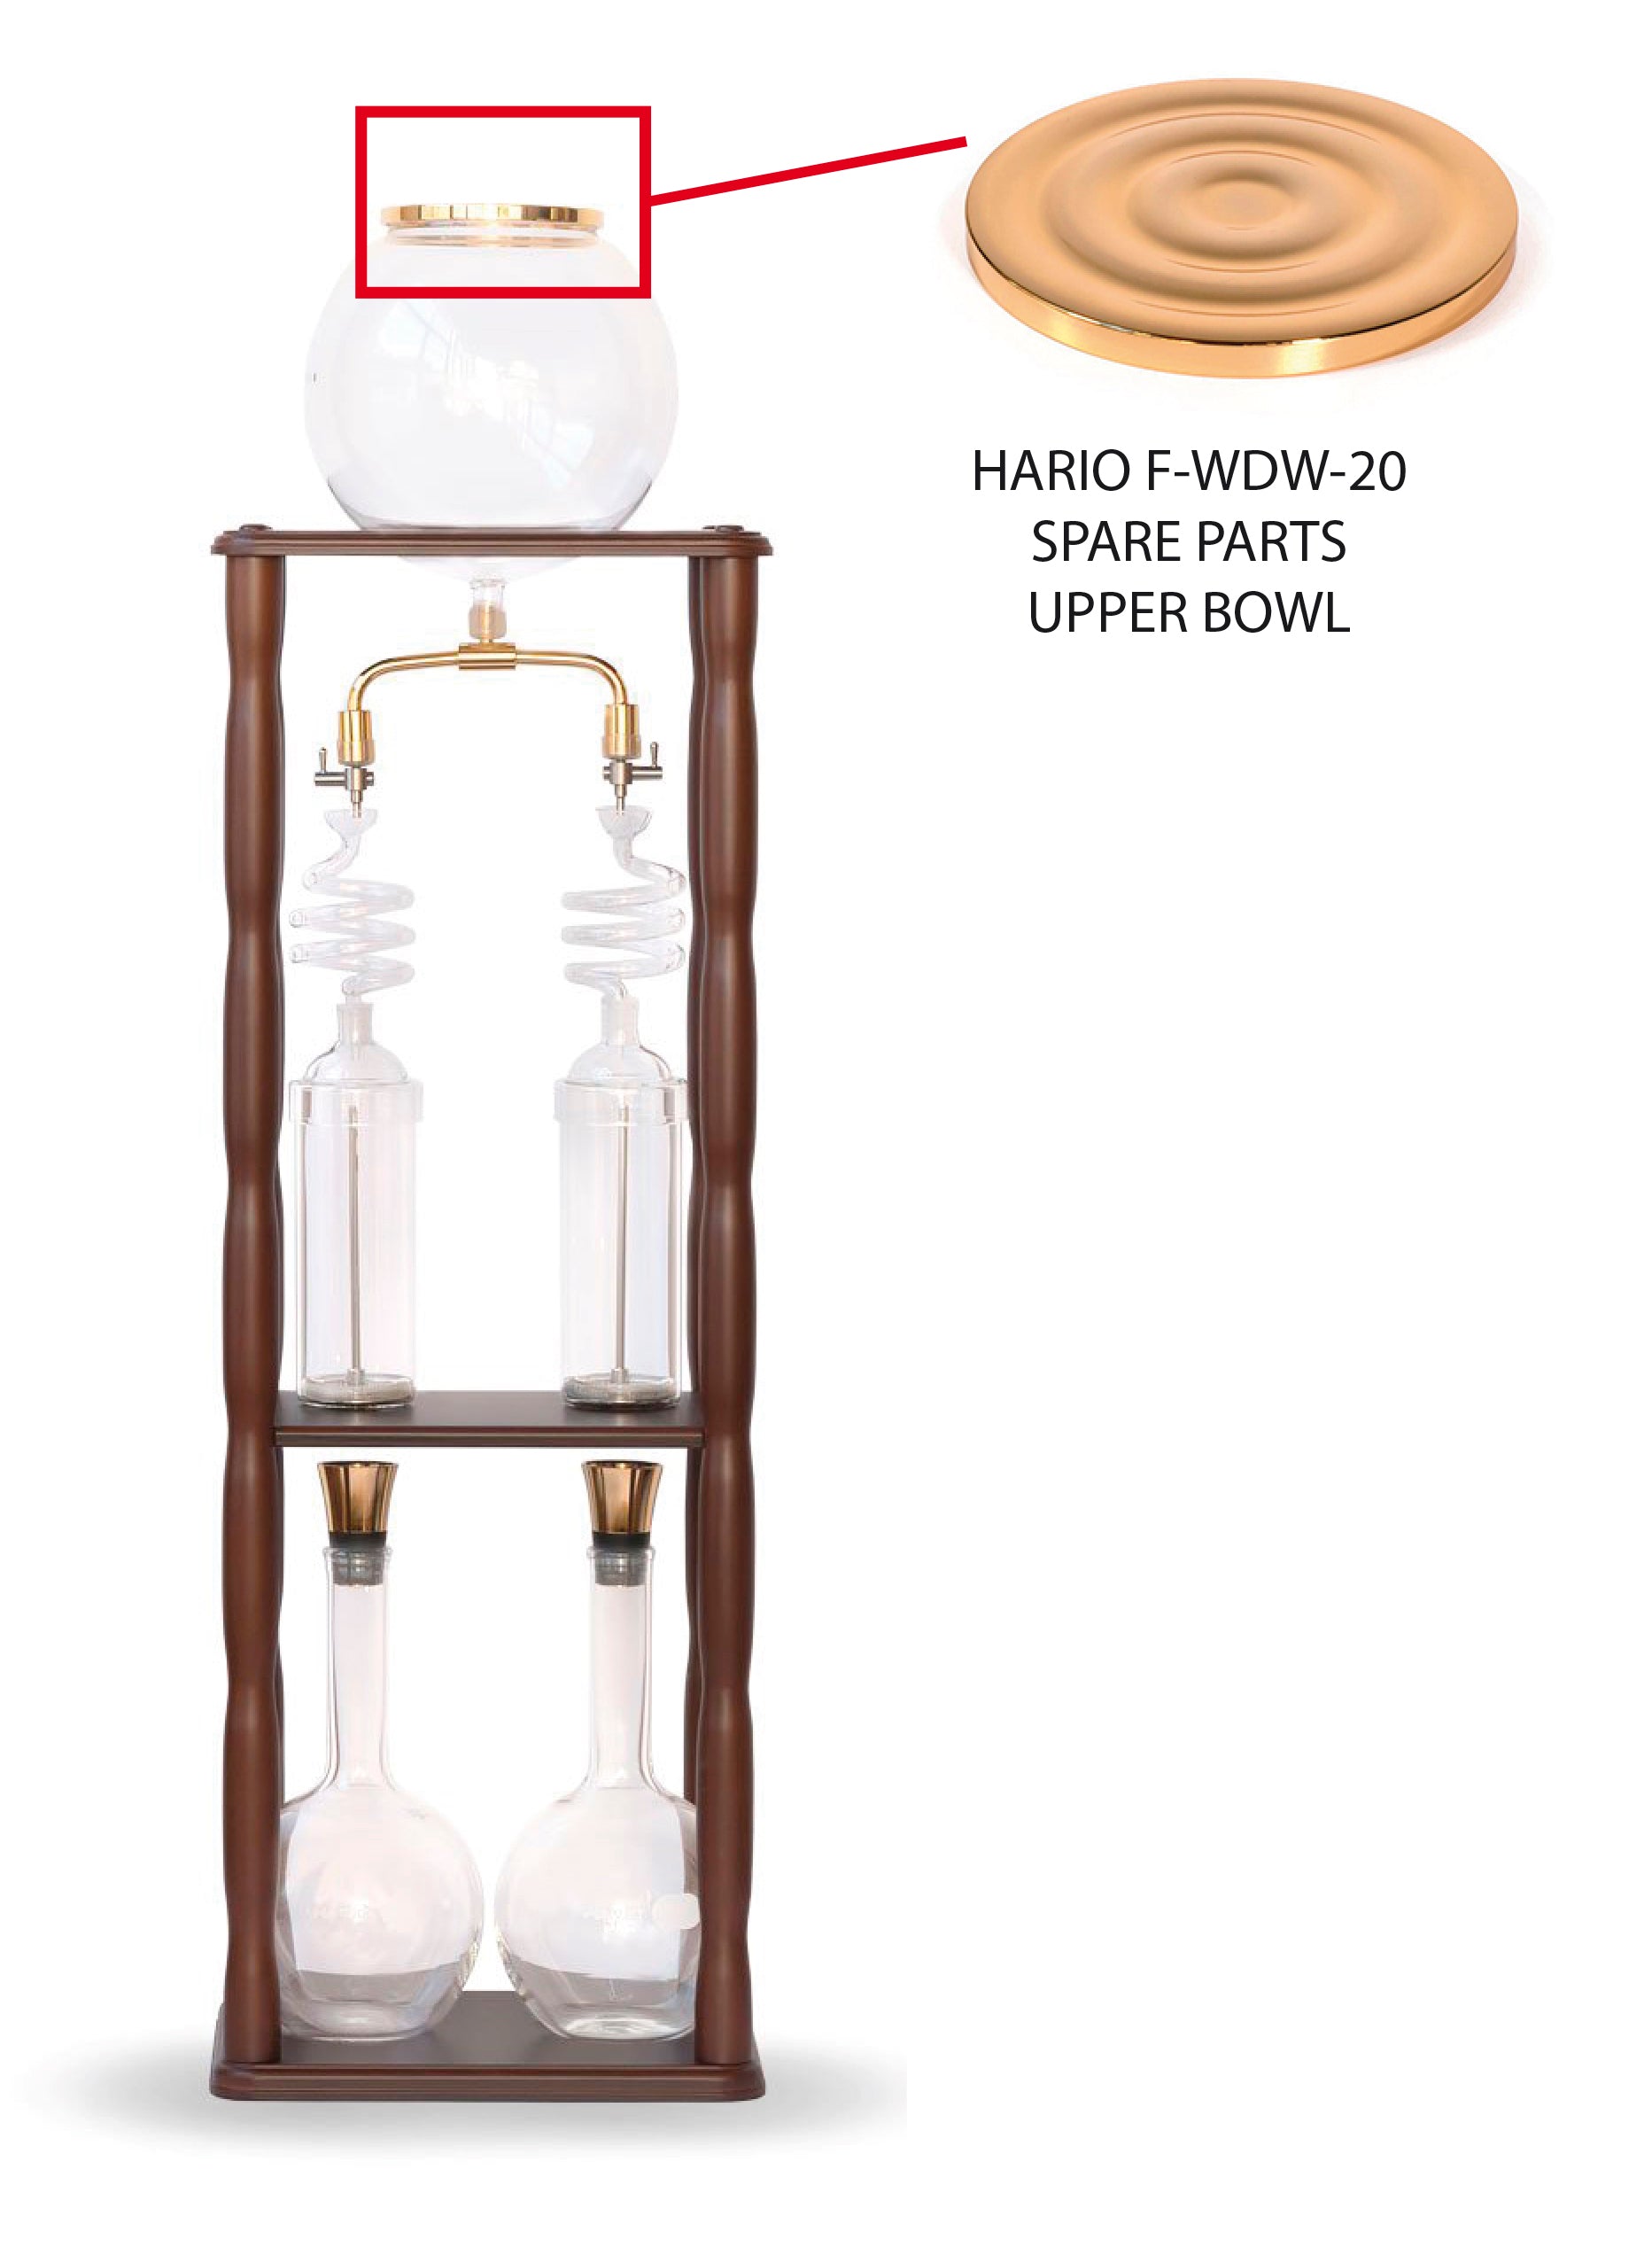 Hario f-wdw-20 spare parts upper bowl